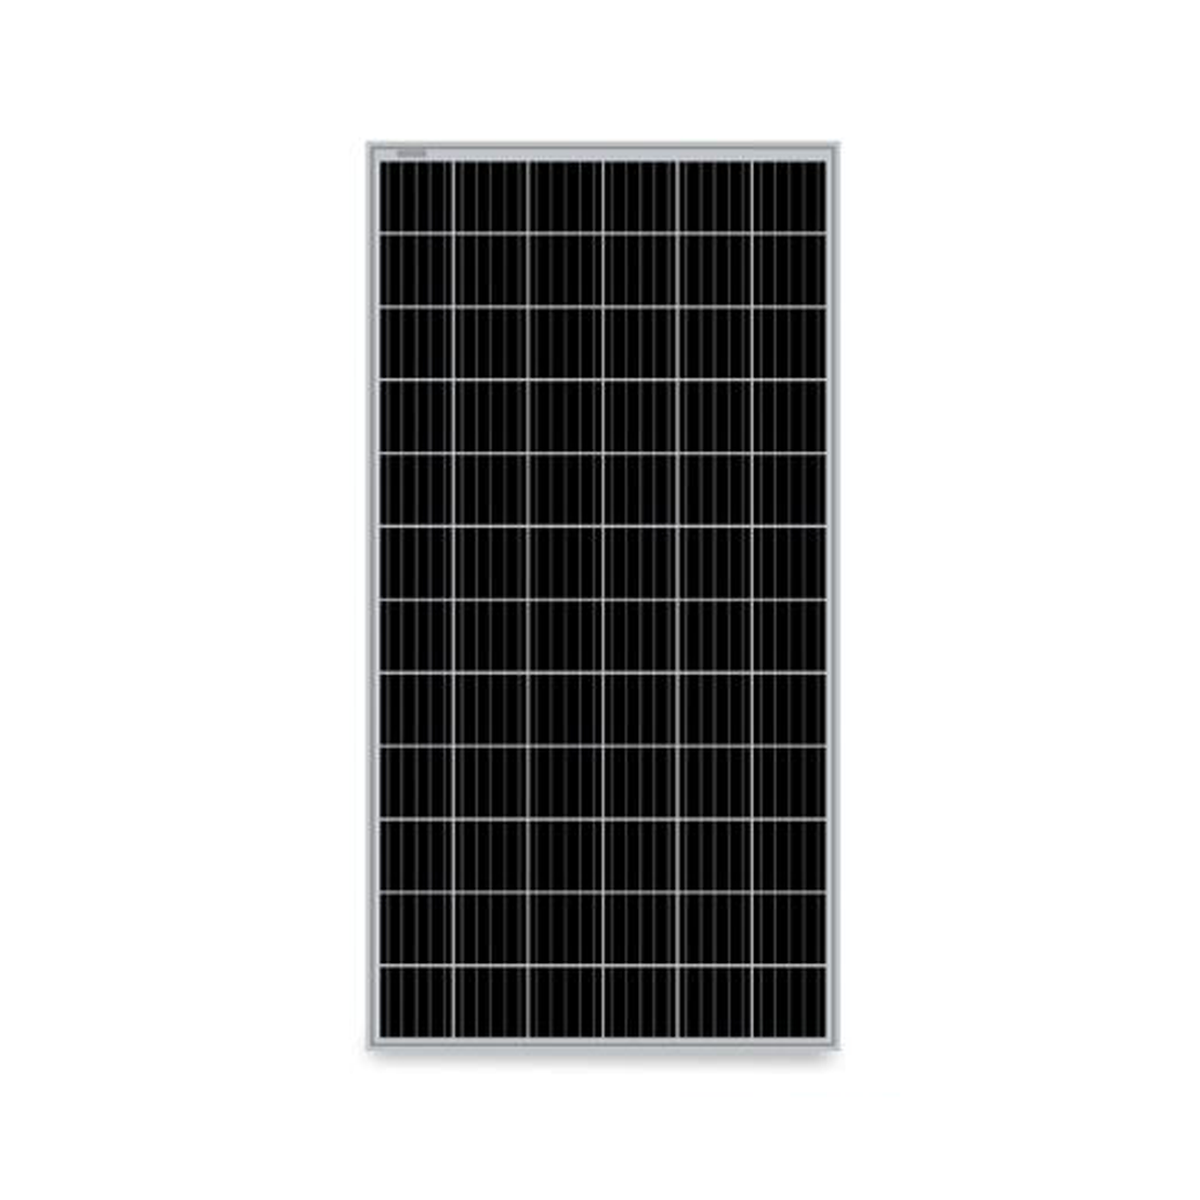 lexron 390W panel, lexron 390Watt perc monokristal gunes paneli, lexron 390W panel, lexron 390Watt panel, lexron 390Watt perc monokristal gunes paneli, lexron 390W watt gunes paneli, lexron 390W watt perc monokristal gunes paneli, lexron 390W Watt fotovoltaik perc monokristal gunes paneli, lexron 390W perc monokristal gunes enerjisi, lexron 390W perc monokristal solar gunes paneli, LEXRON 390WATT